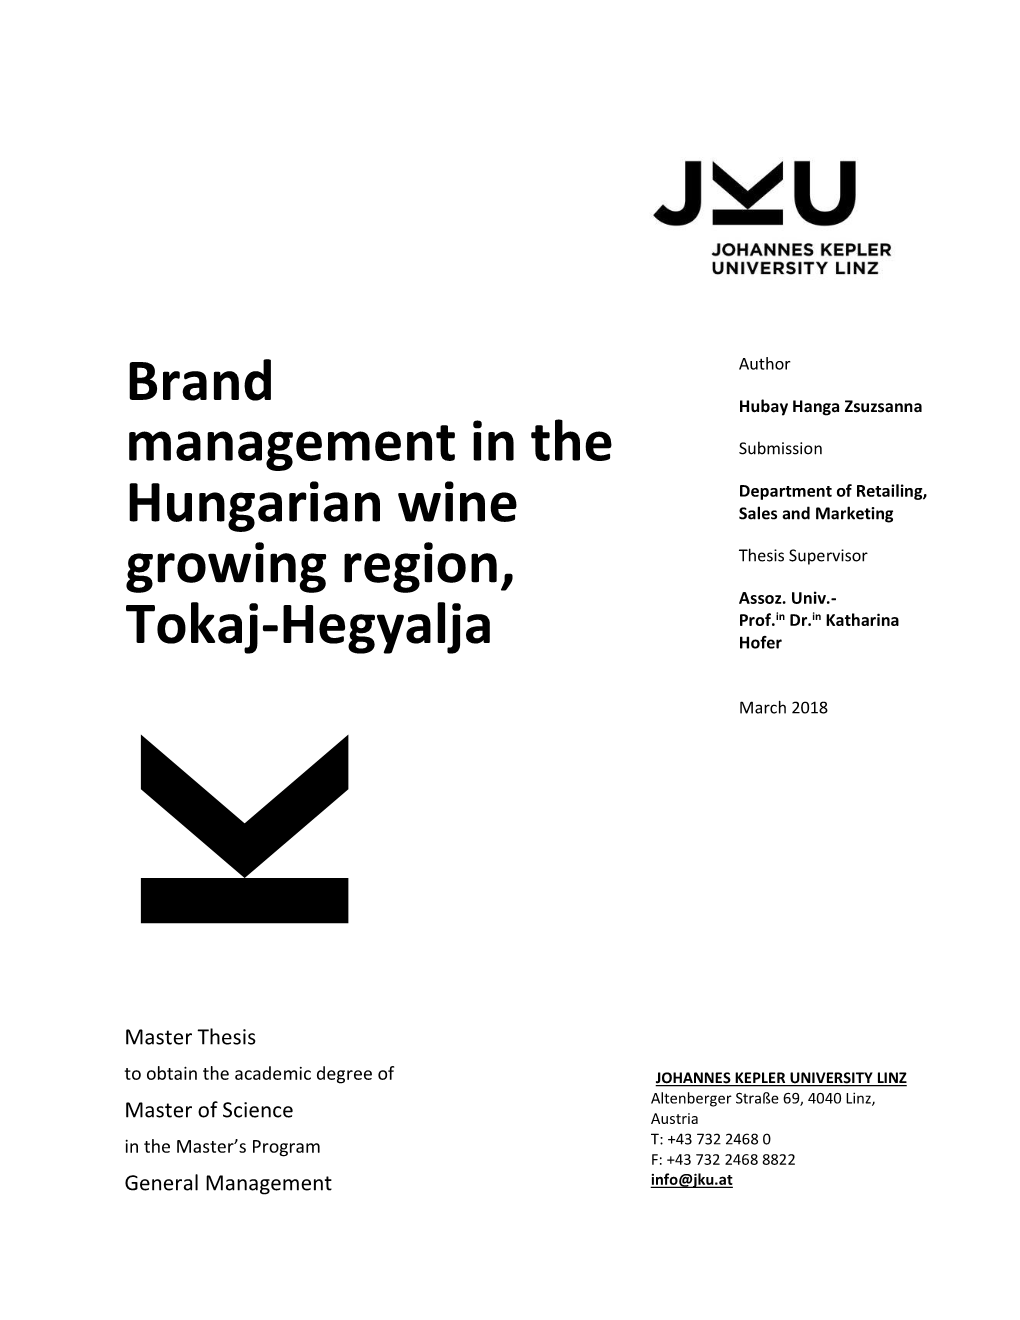 Brand Management in the Hungarian Wine Growing Region, Tokaj-Hegyalja